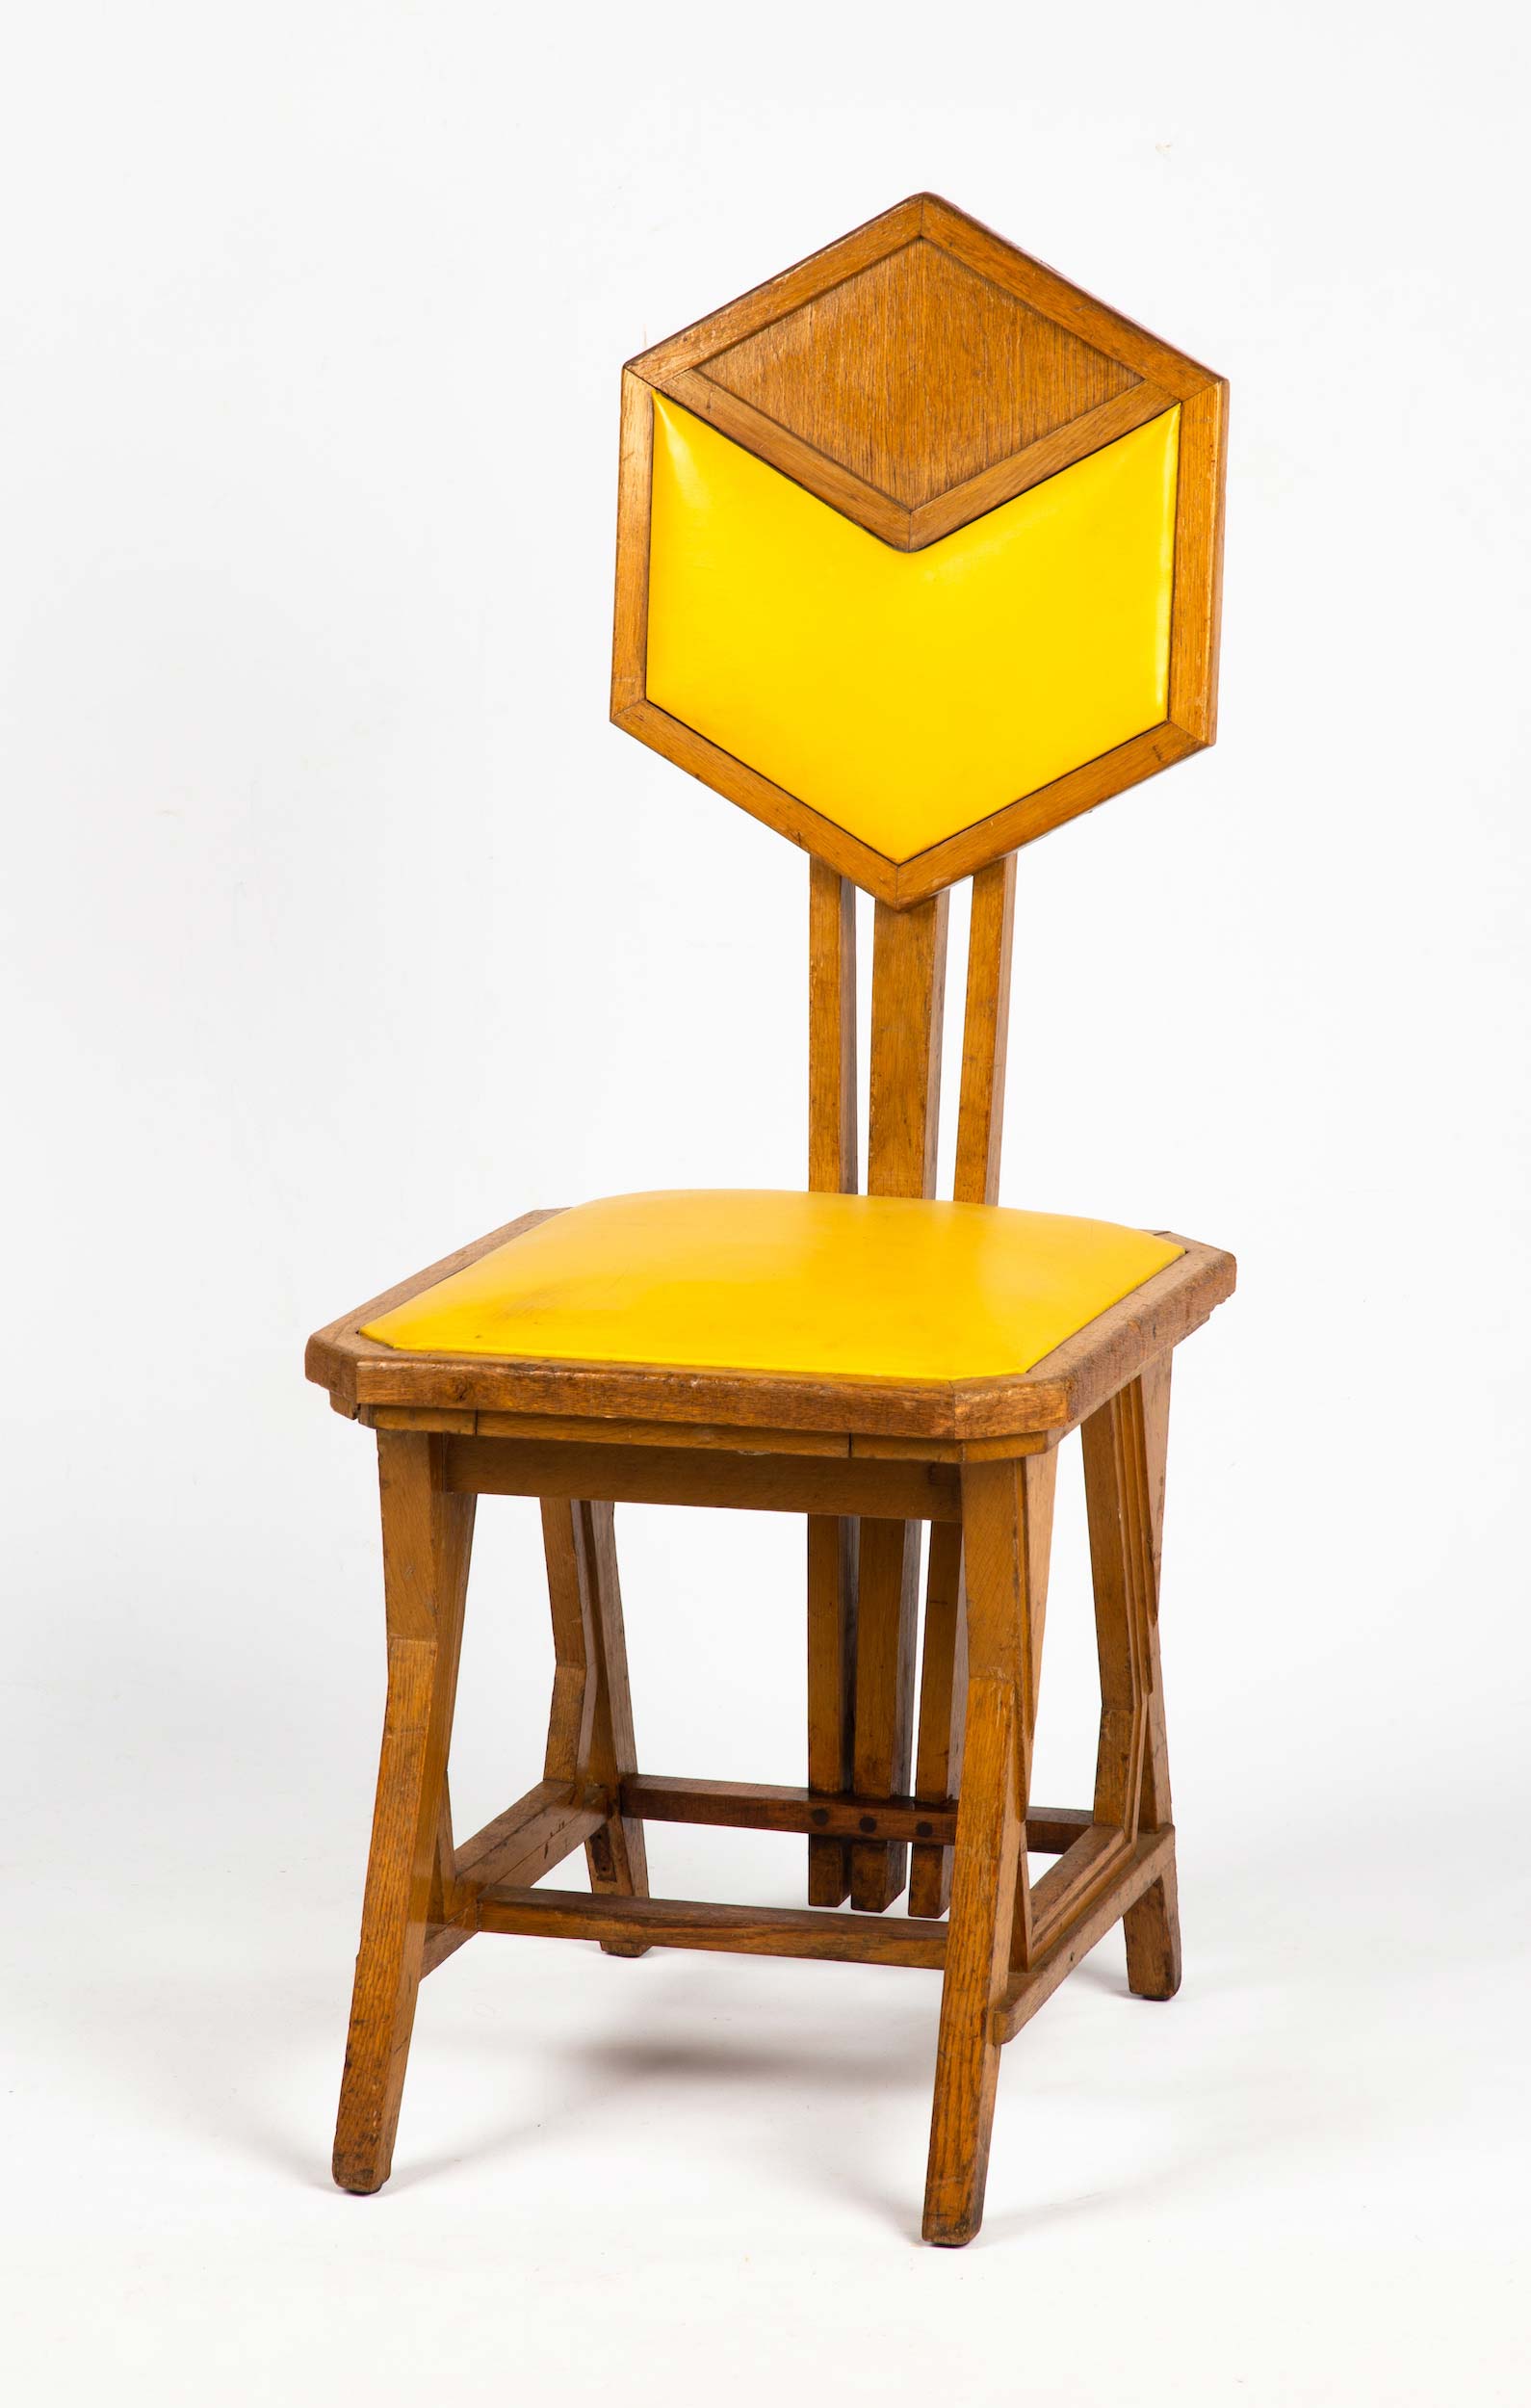 Frank Lloyd Wright (American, 1867-1959) Peacock Chair, $10,000-$15,000